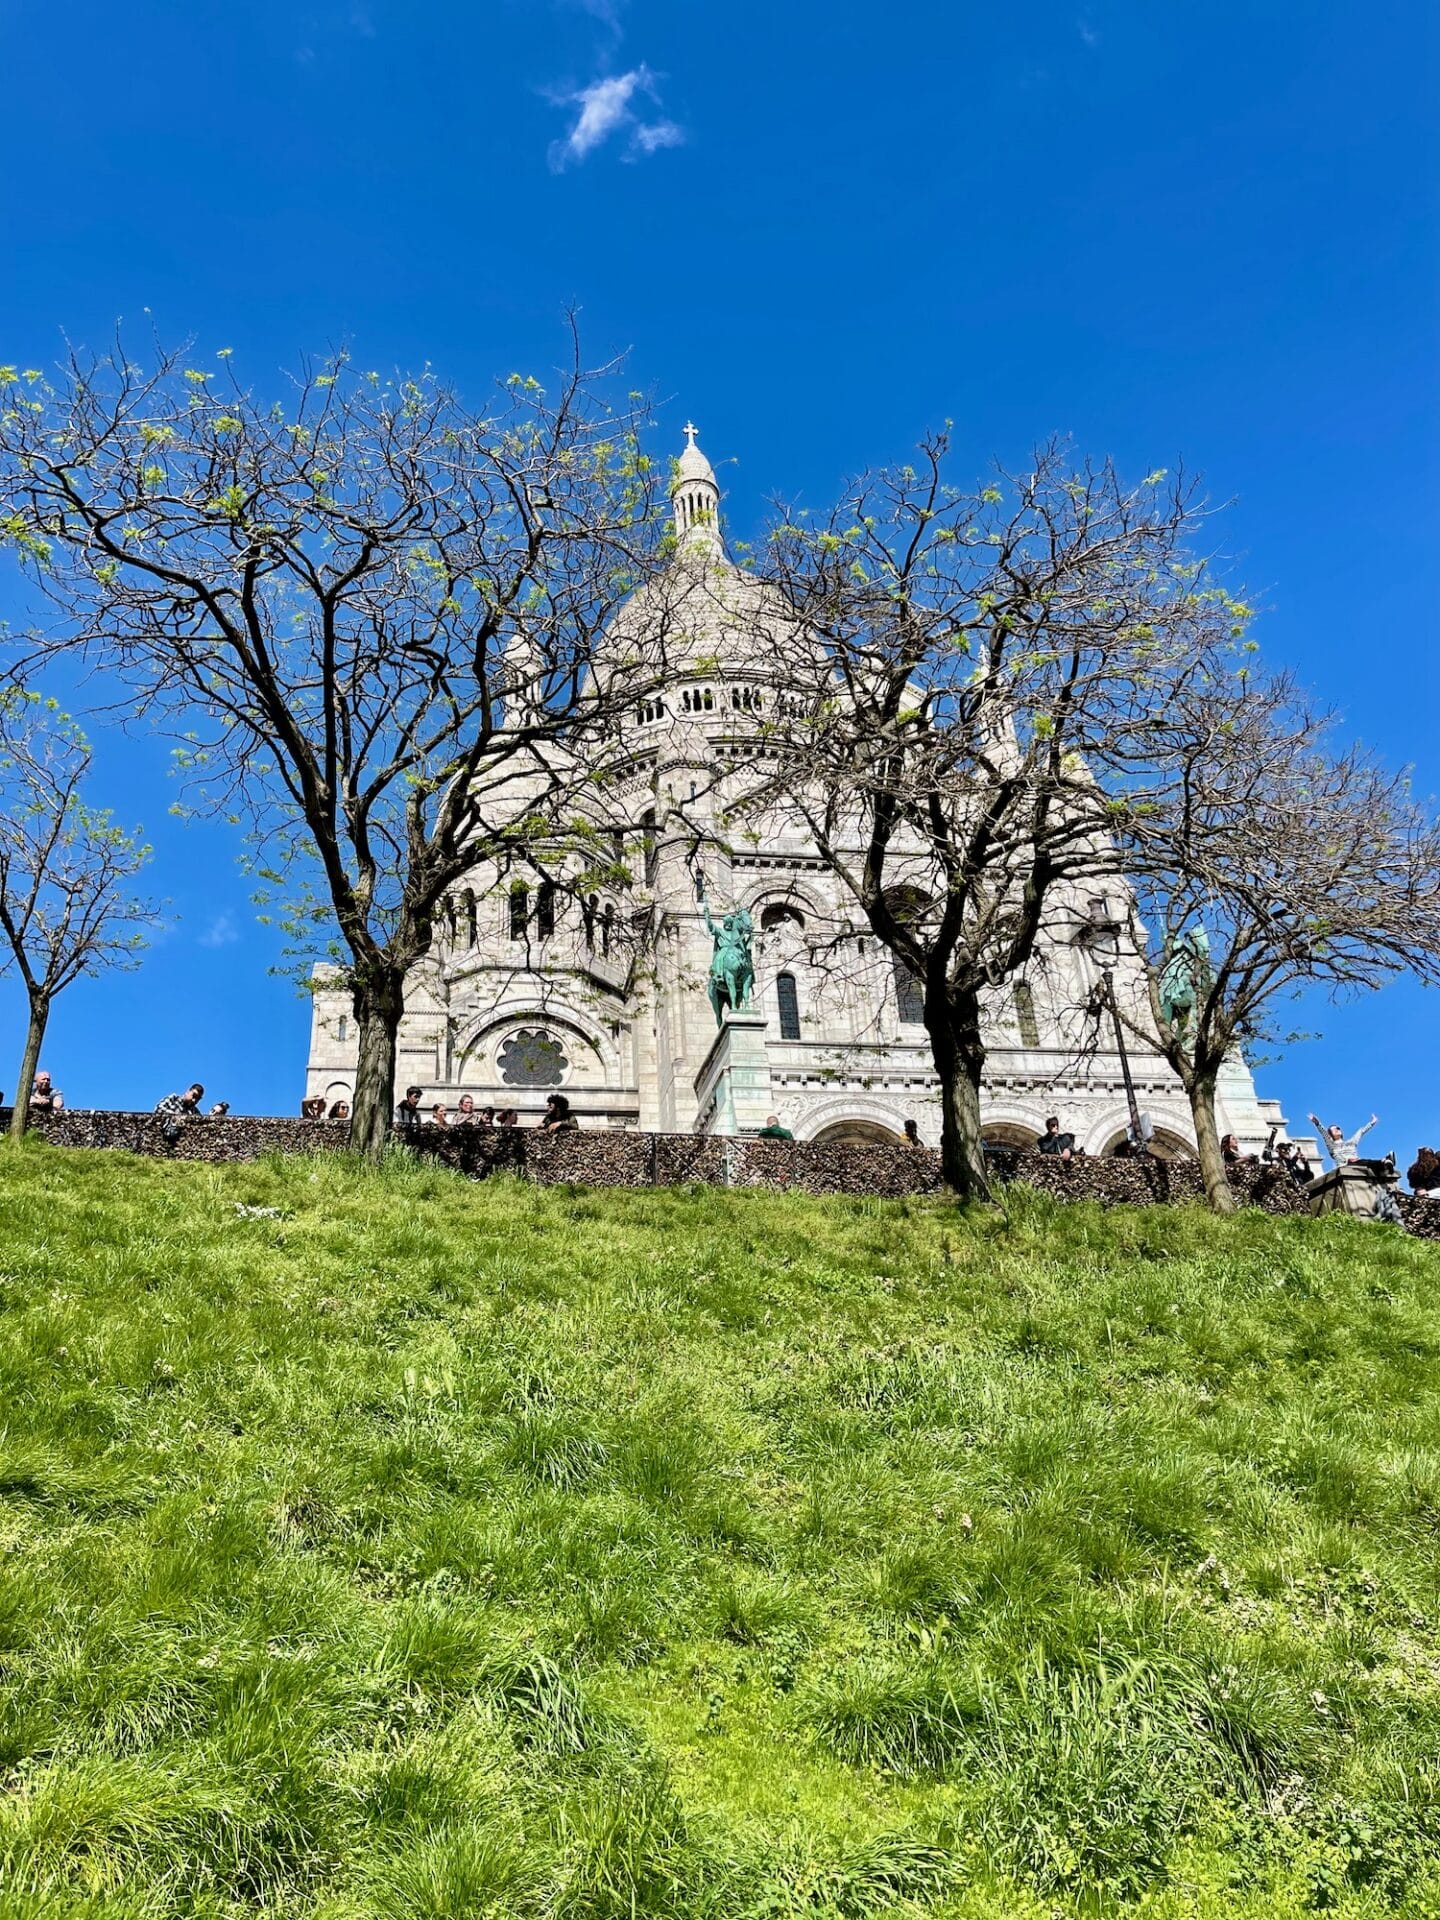 White-domed Basilica of the Sacré-Coeur.